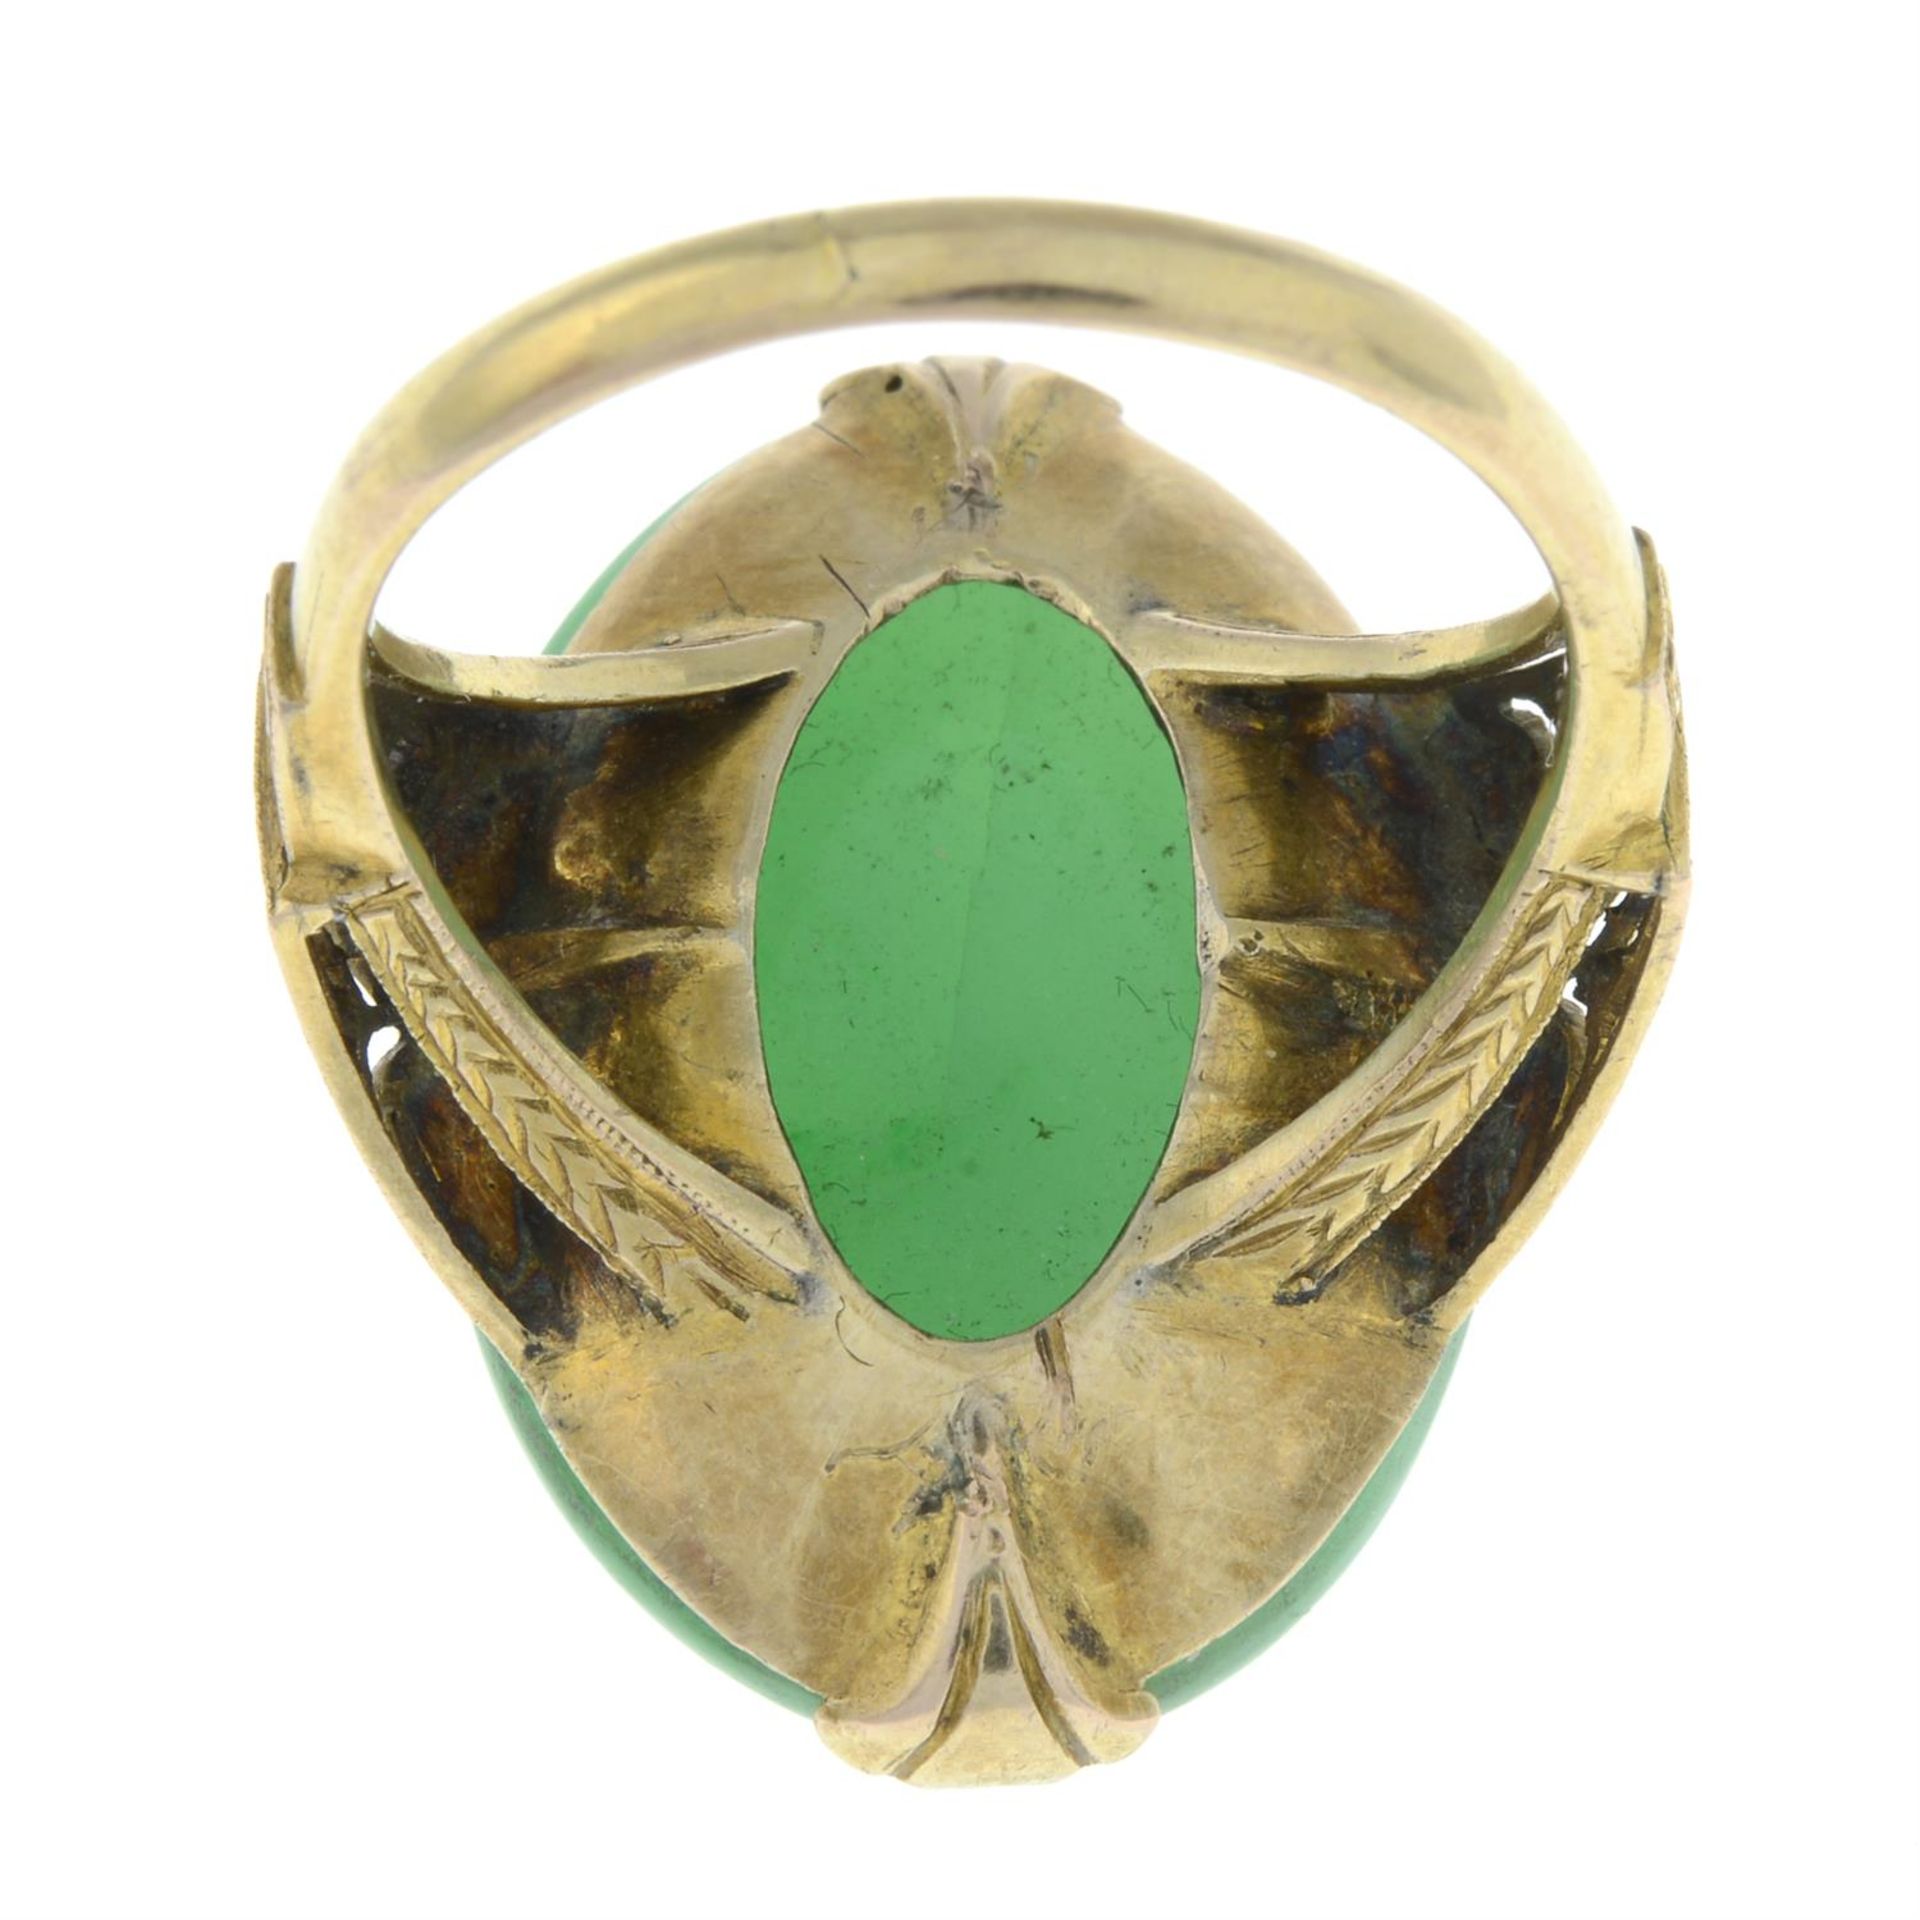 Mid 20th century gold jadeite jade ring - Image 3 of 5